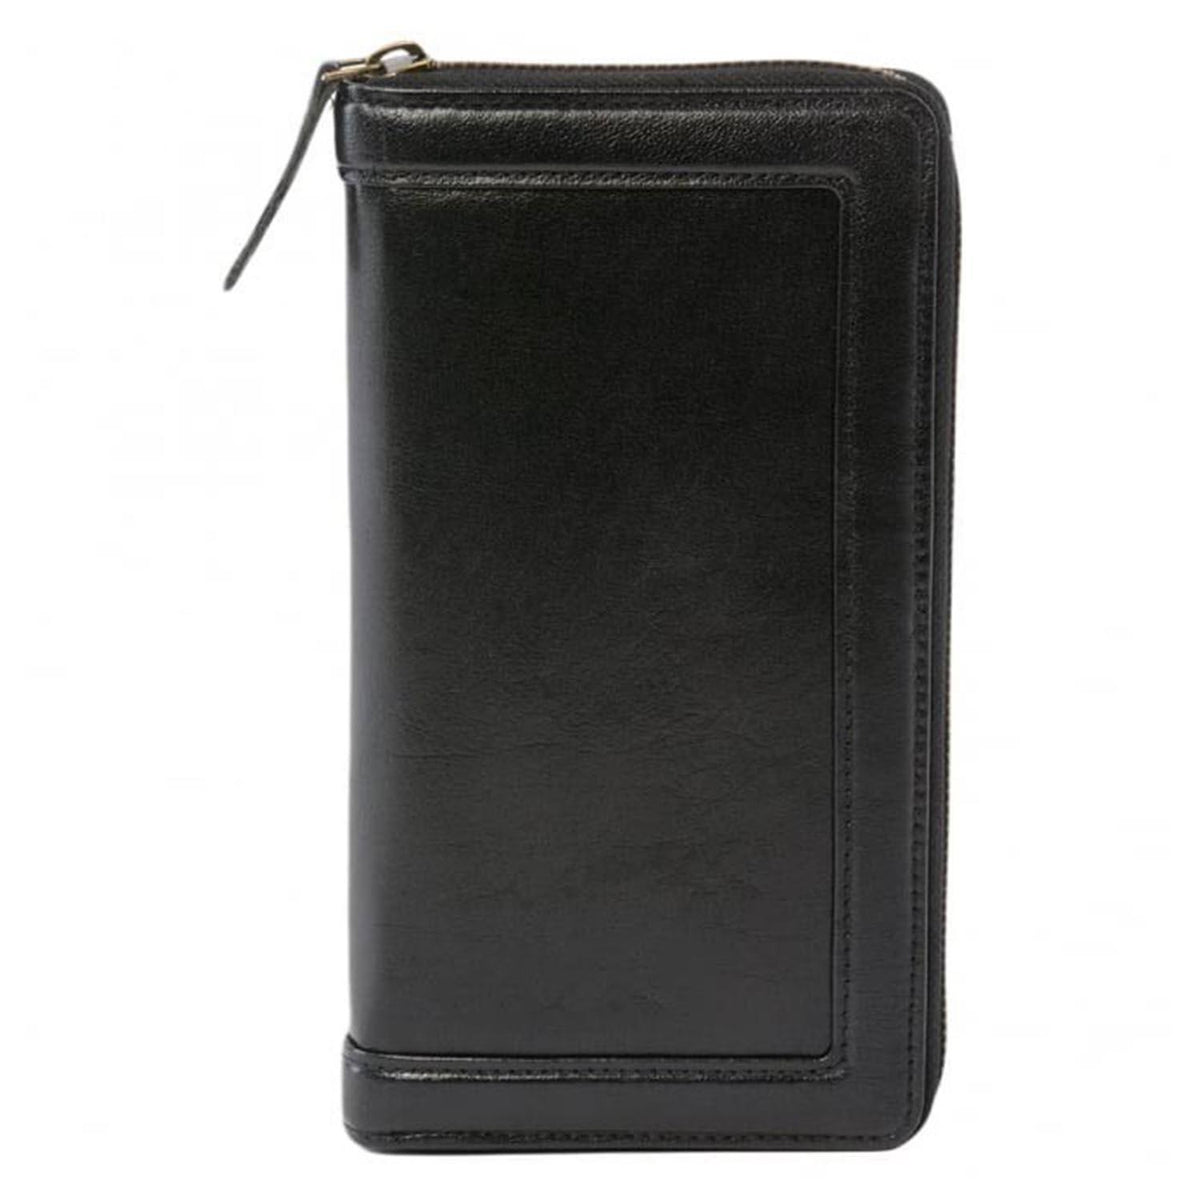 Vegetable Tanned Leather Travel Wallet Black